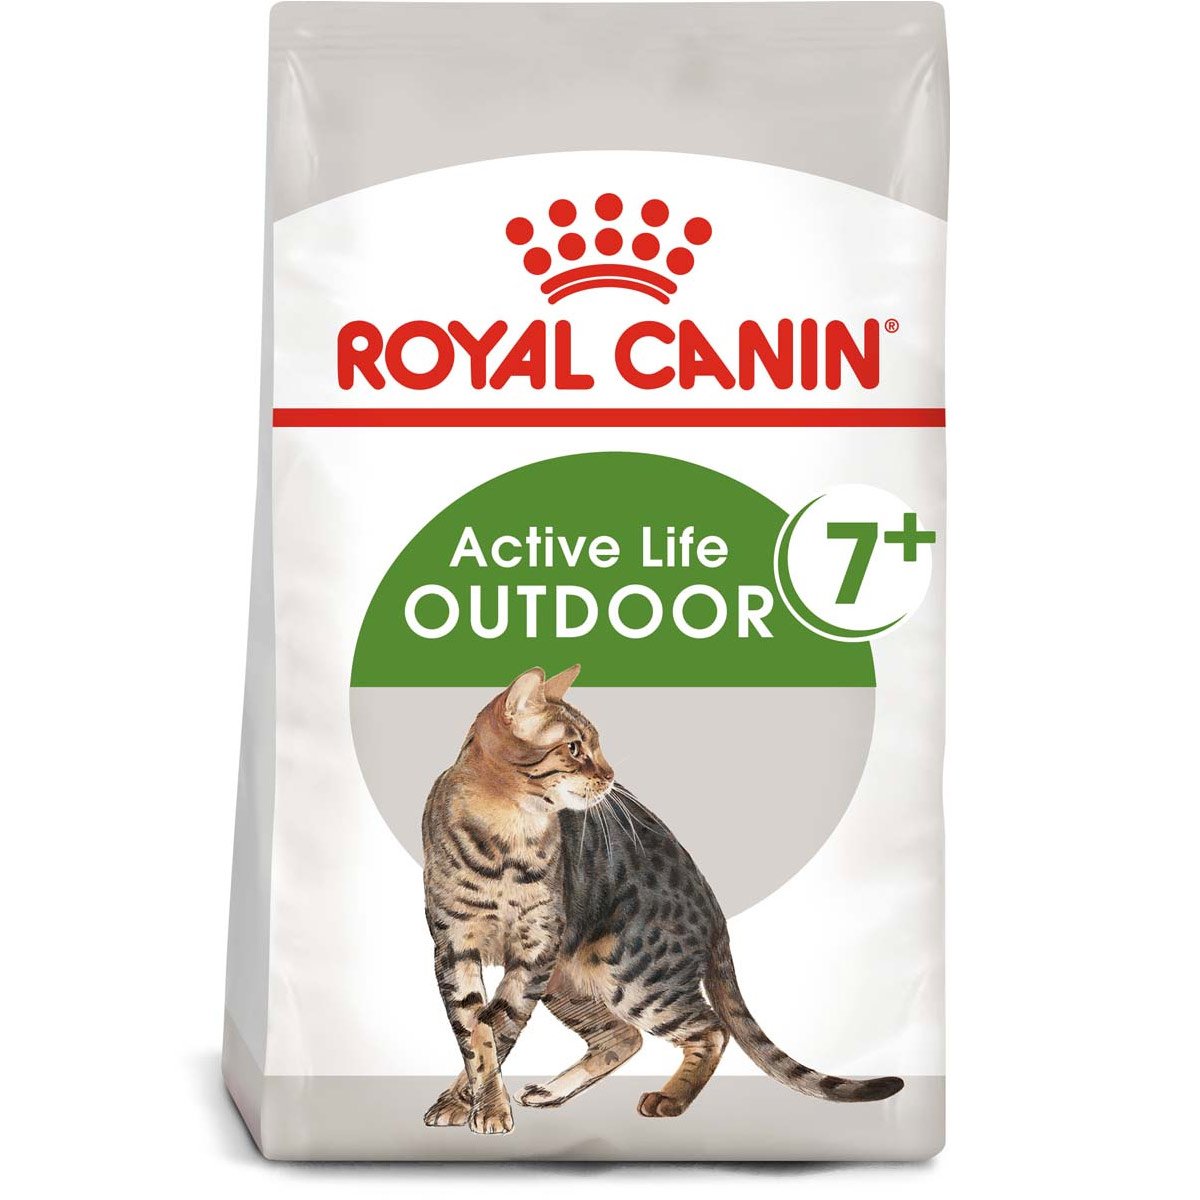 ROYAL CANIN OUTDOOR 7+ Katzenfutter trocken für ältere Freigänger 2x10kg von Royal Canin